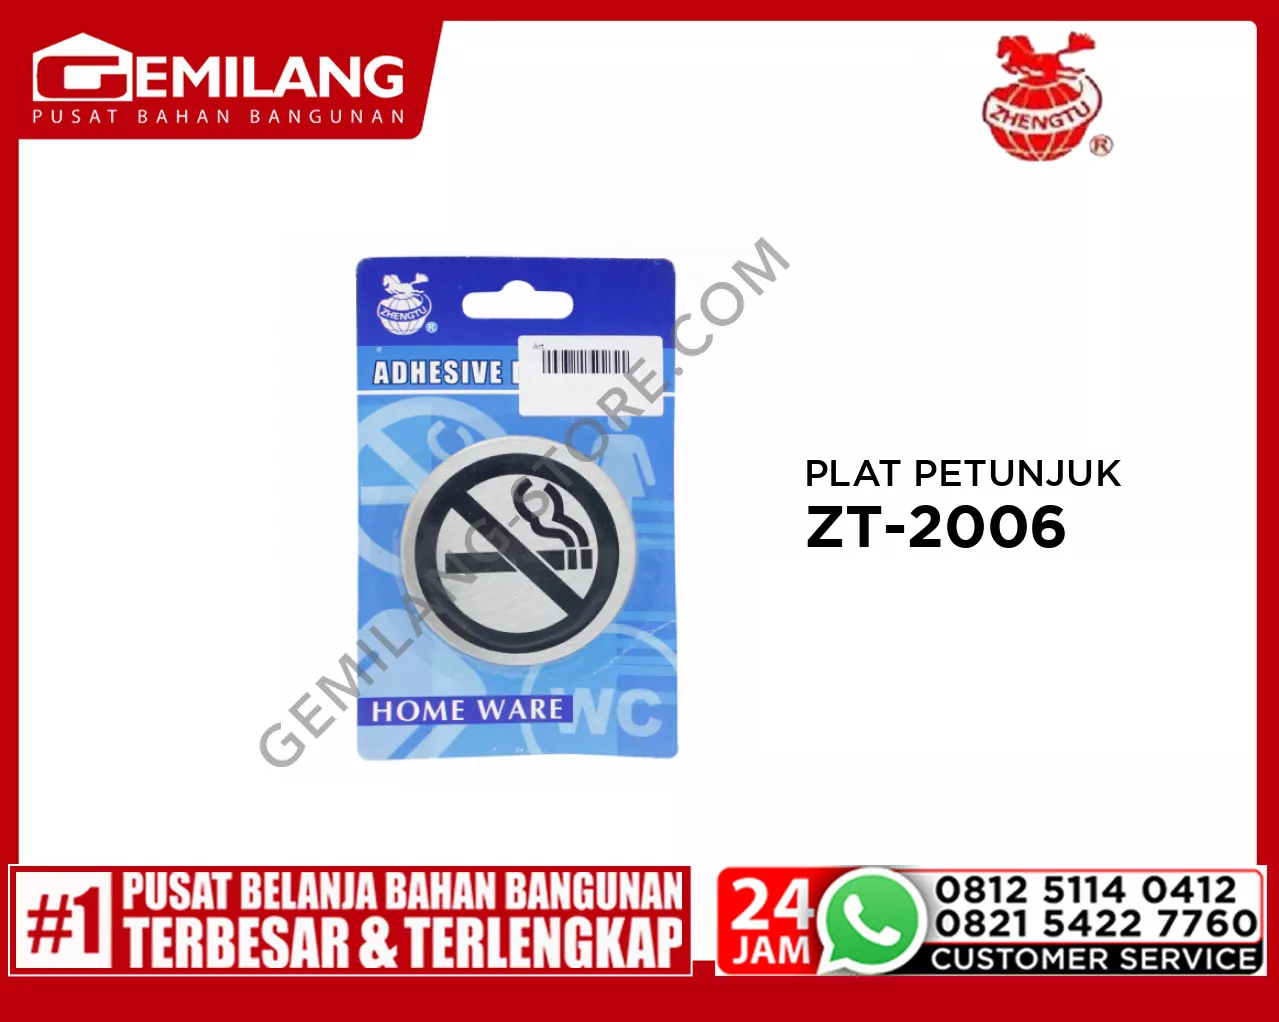 PLAT PETUNJUK NO SMOKING ZT-2006 STAINLESS